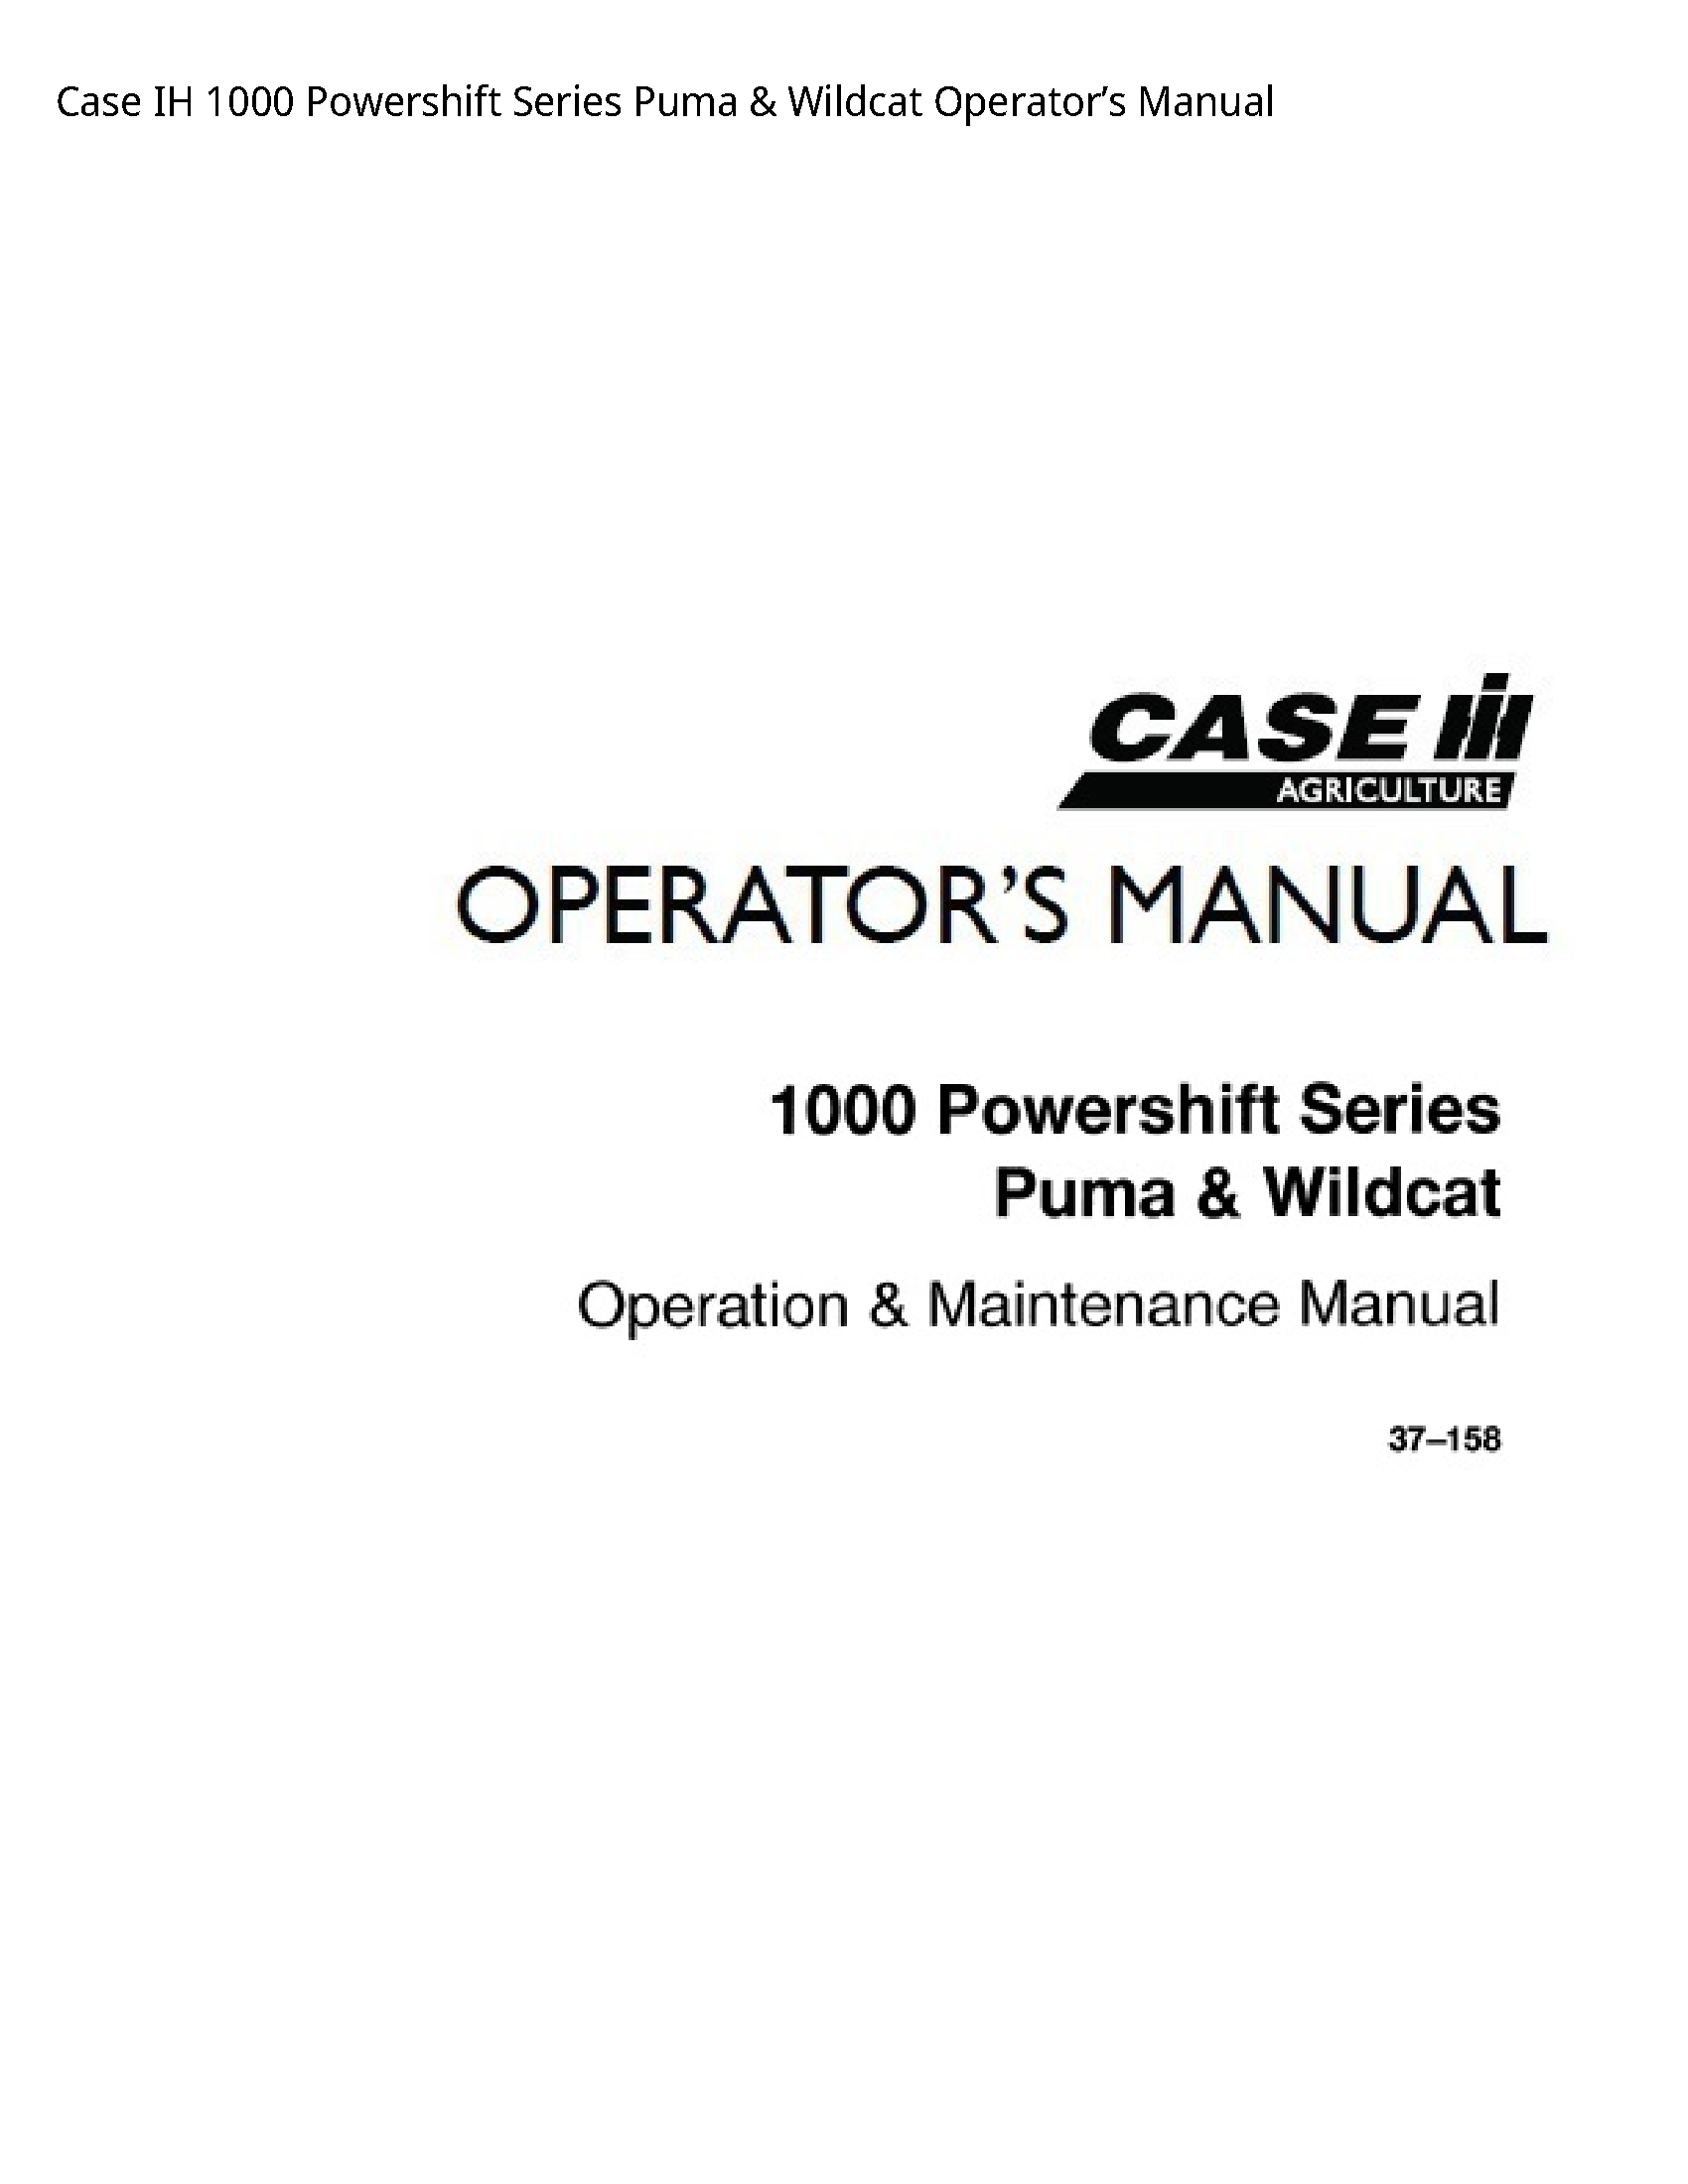 Case/Case IH 1000 IH Powershift Series Puma Wildcat Operator’s manual